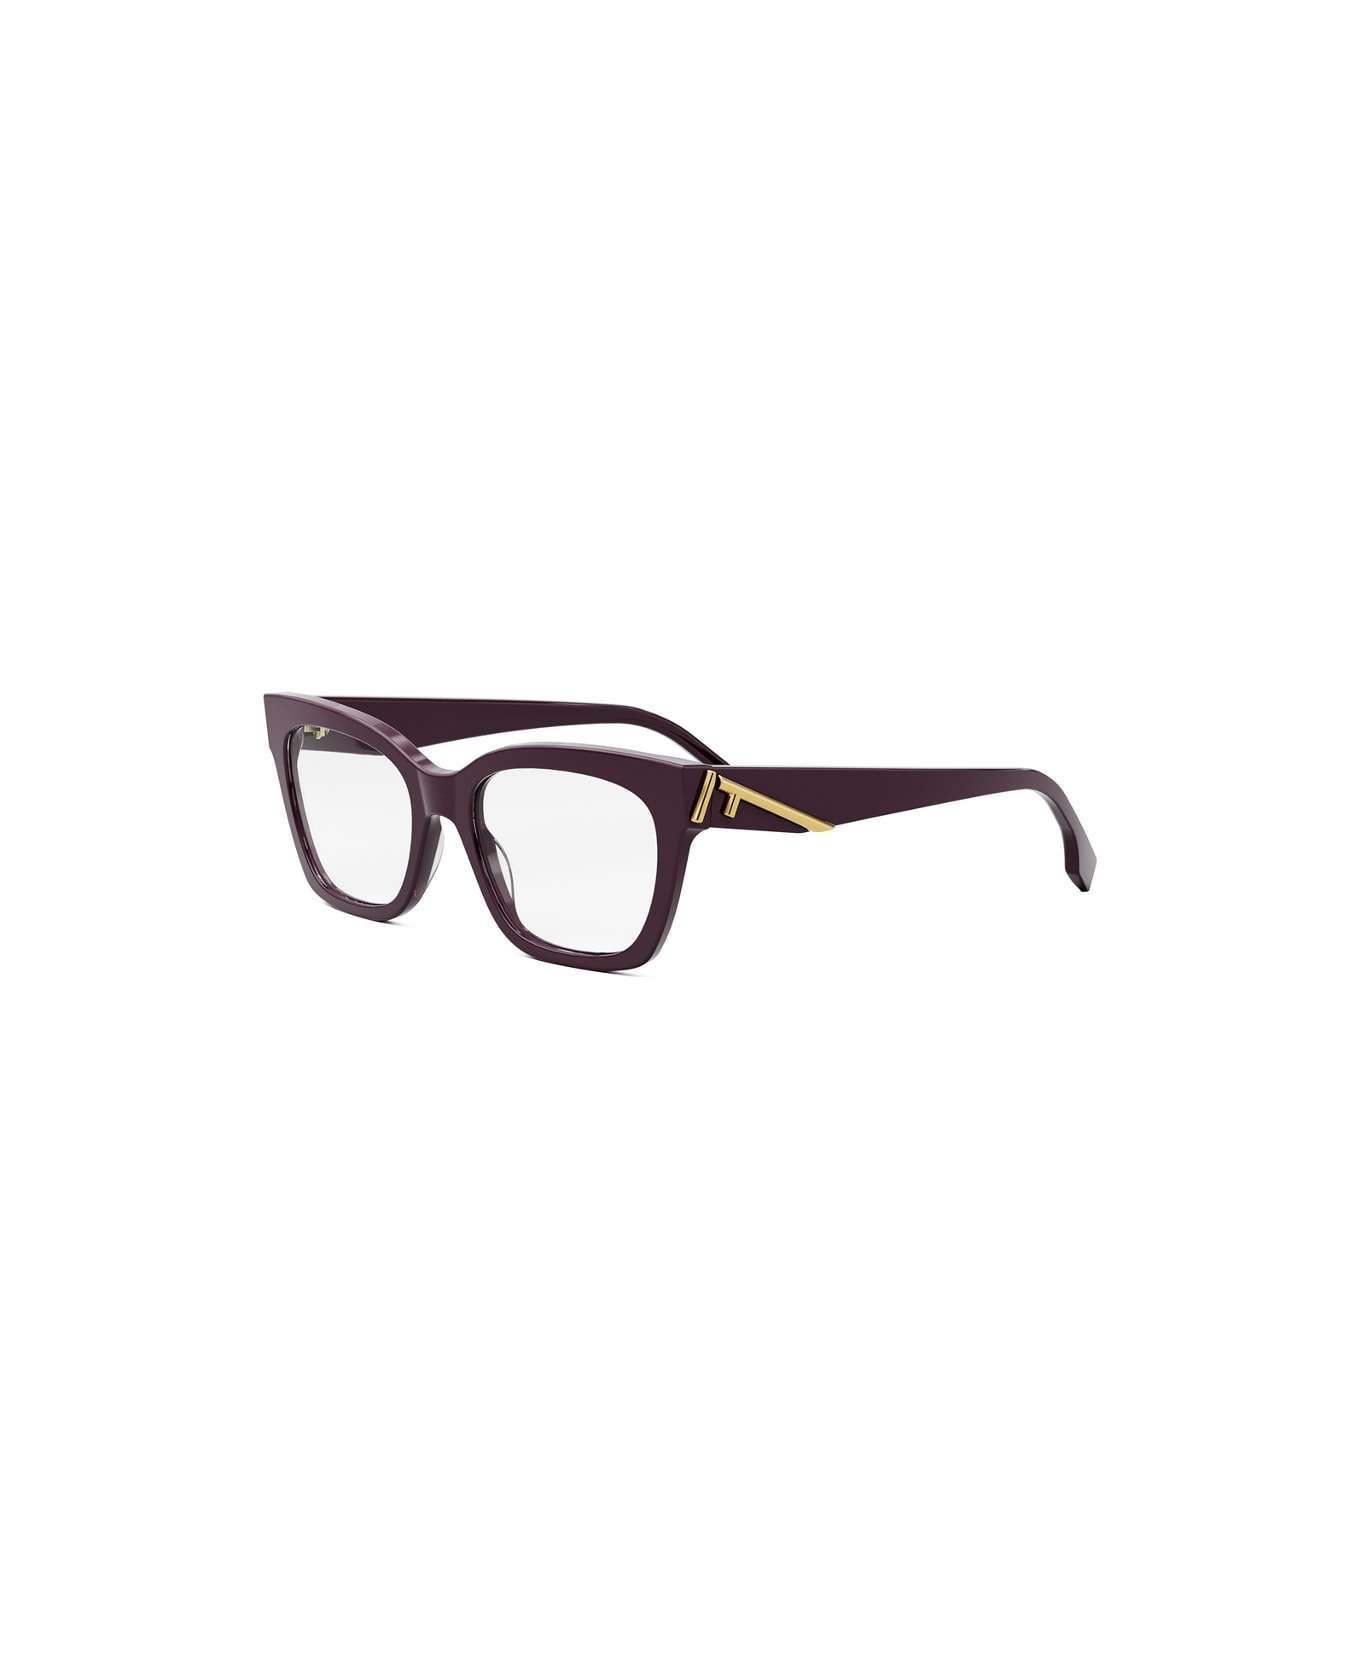 Fendi Eyewear FE50073i 081 Glasses - Vinaccia アイウェア